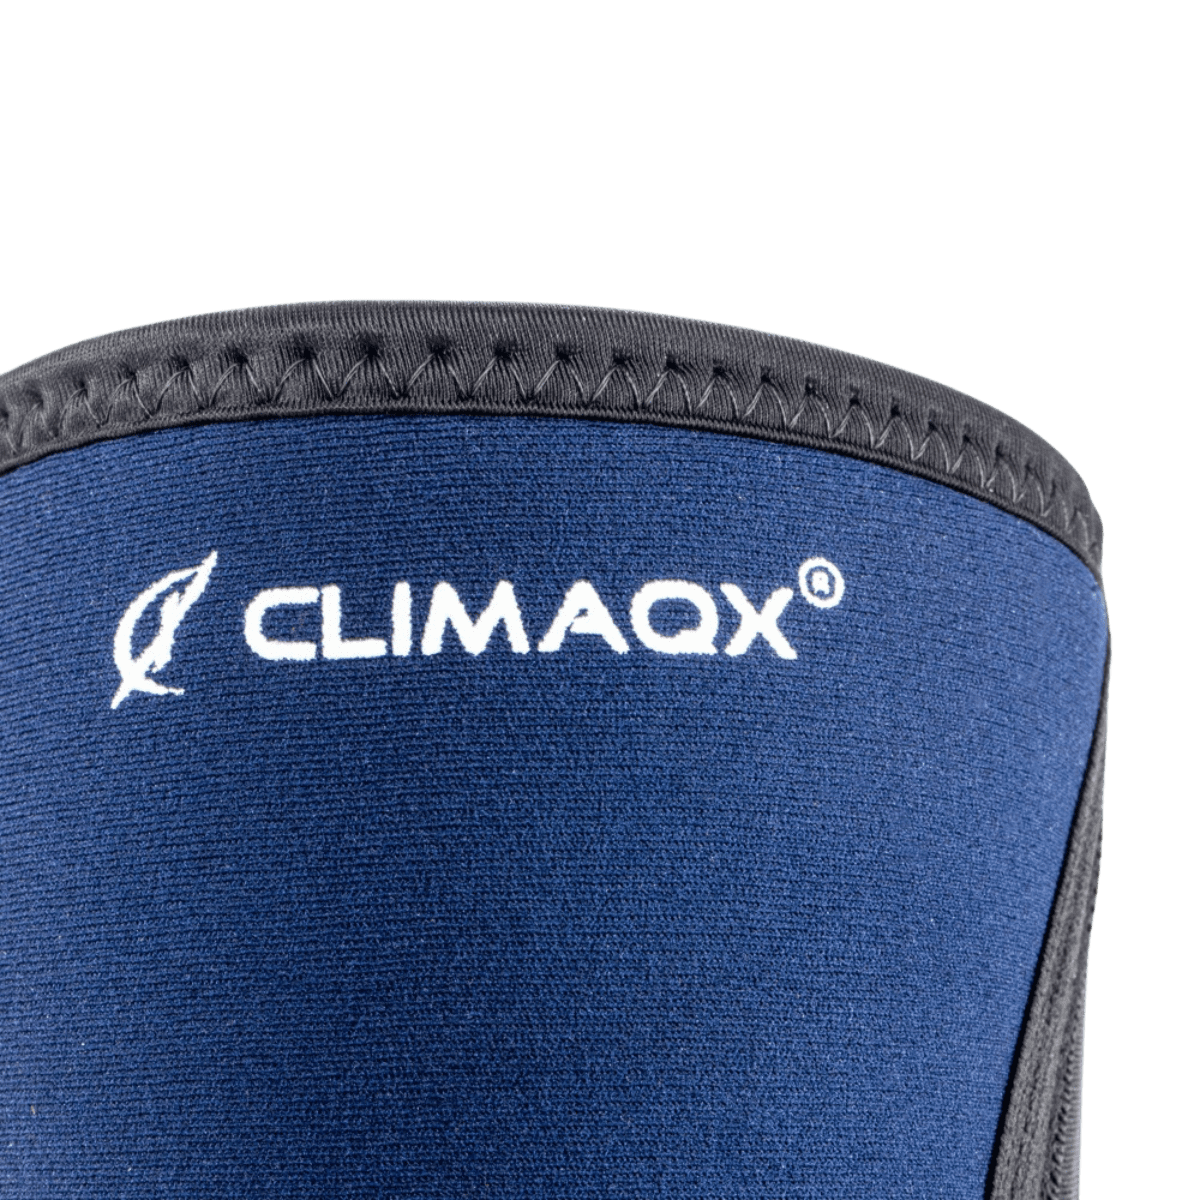 Climaqx steznici za laktove